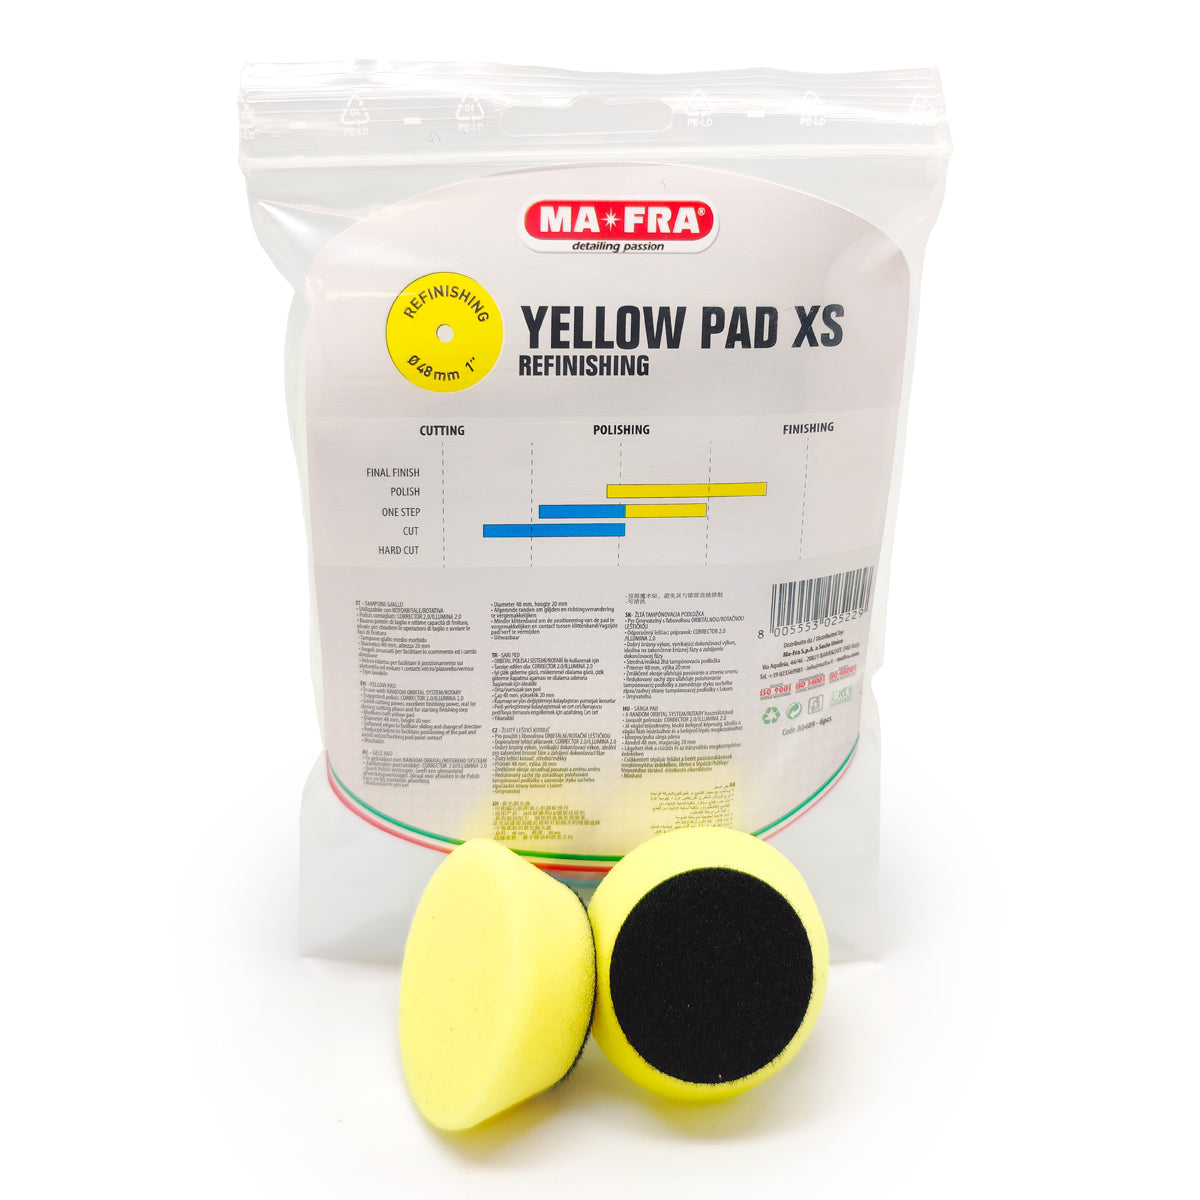 1" polishing pad. Labocosmetica Yellow Pad 64mm. Polishing Pad for refinishing. Yellow Polishing Pad. Labocosmetica Cork Ireland